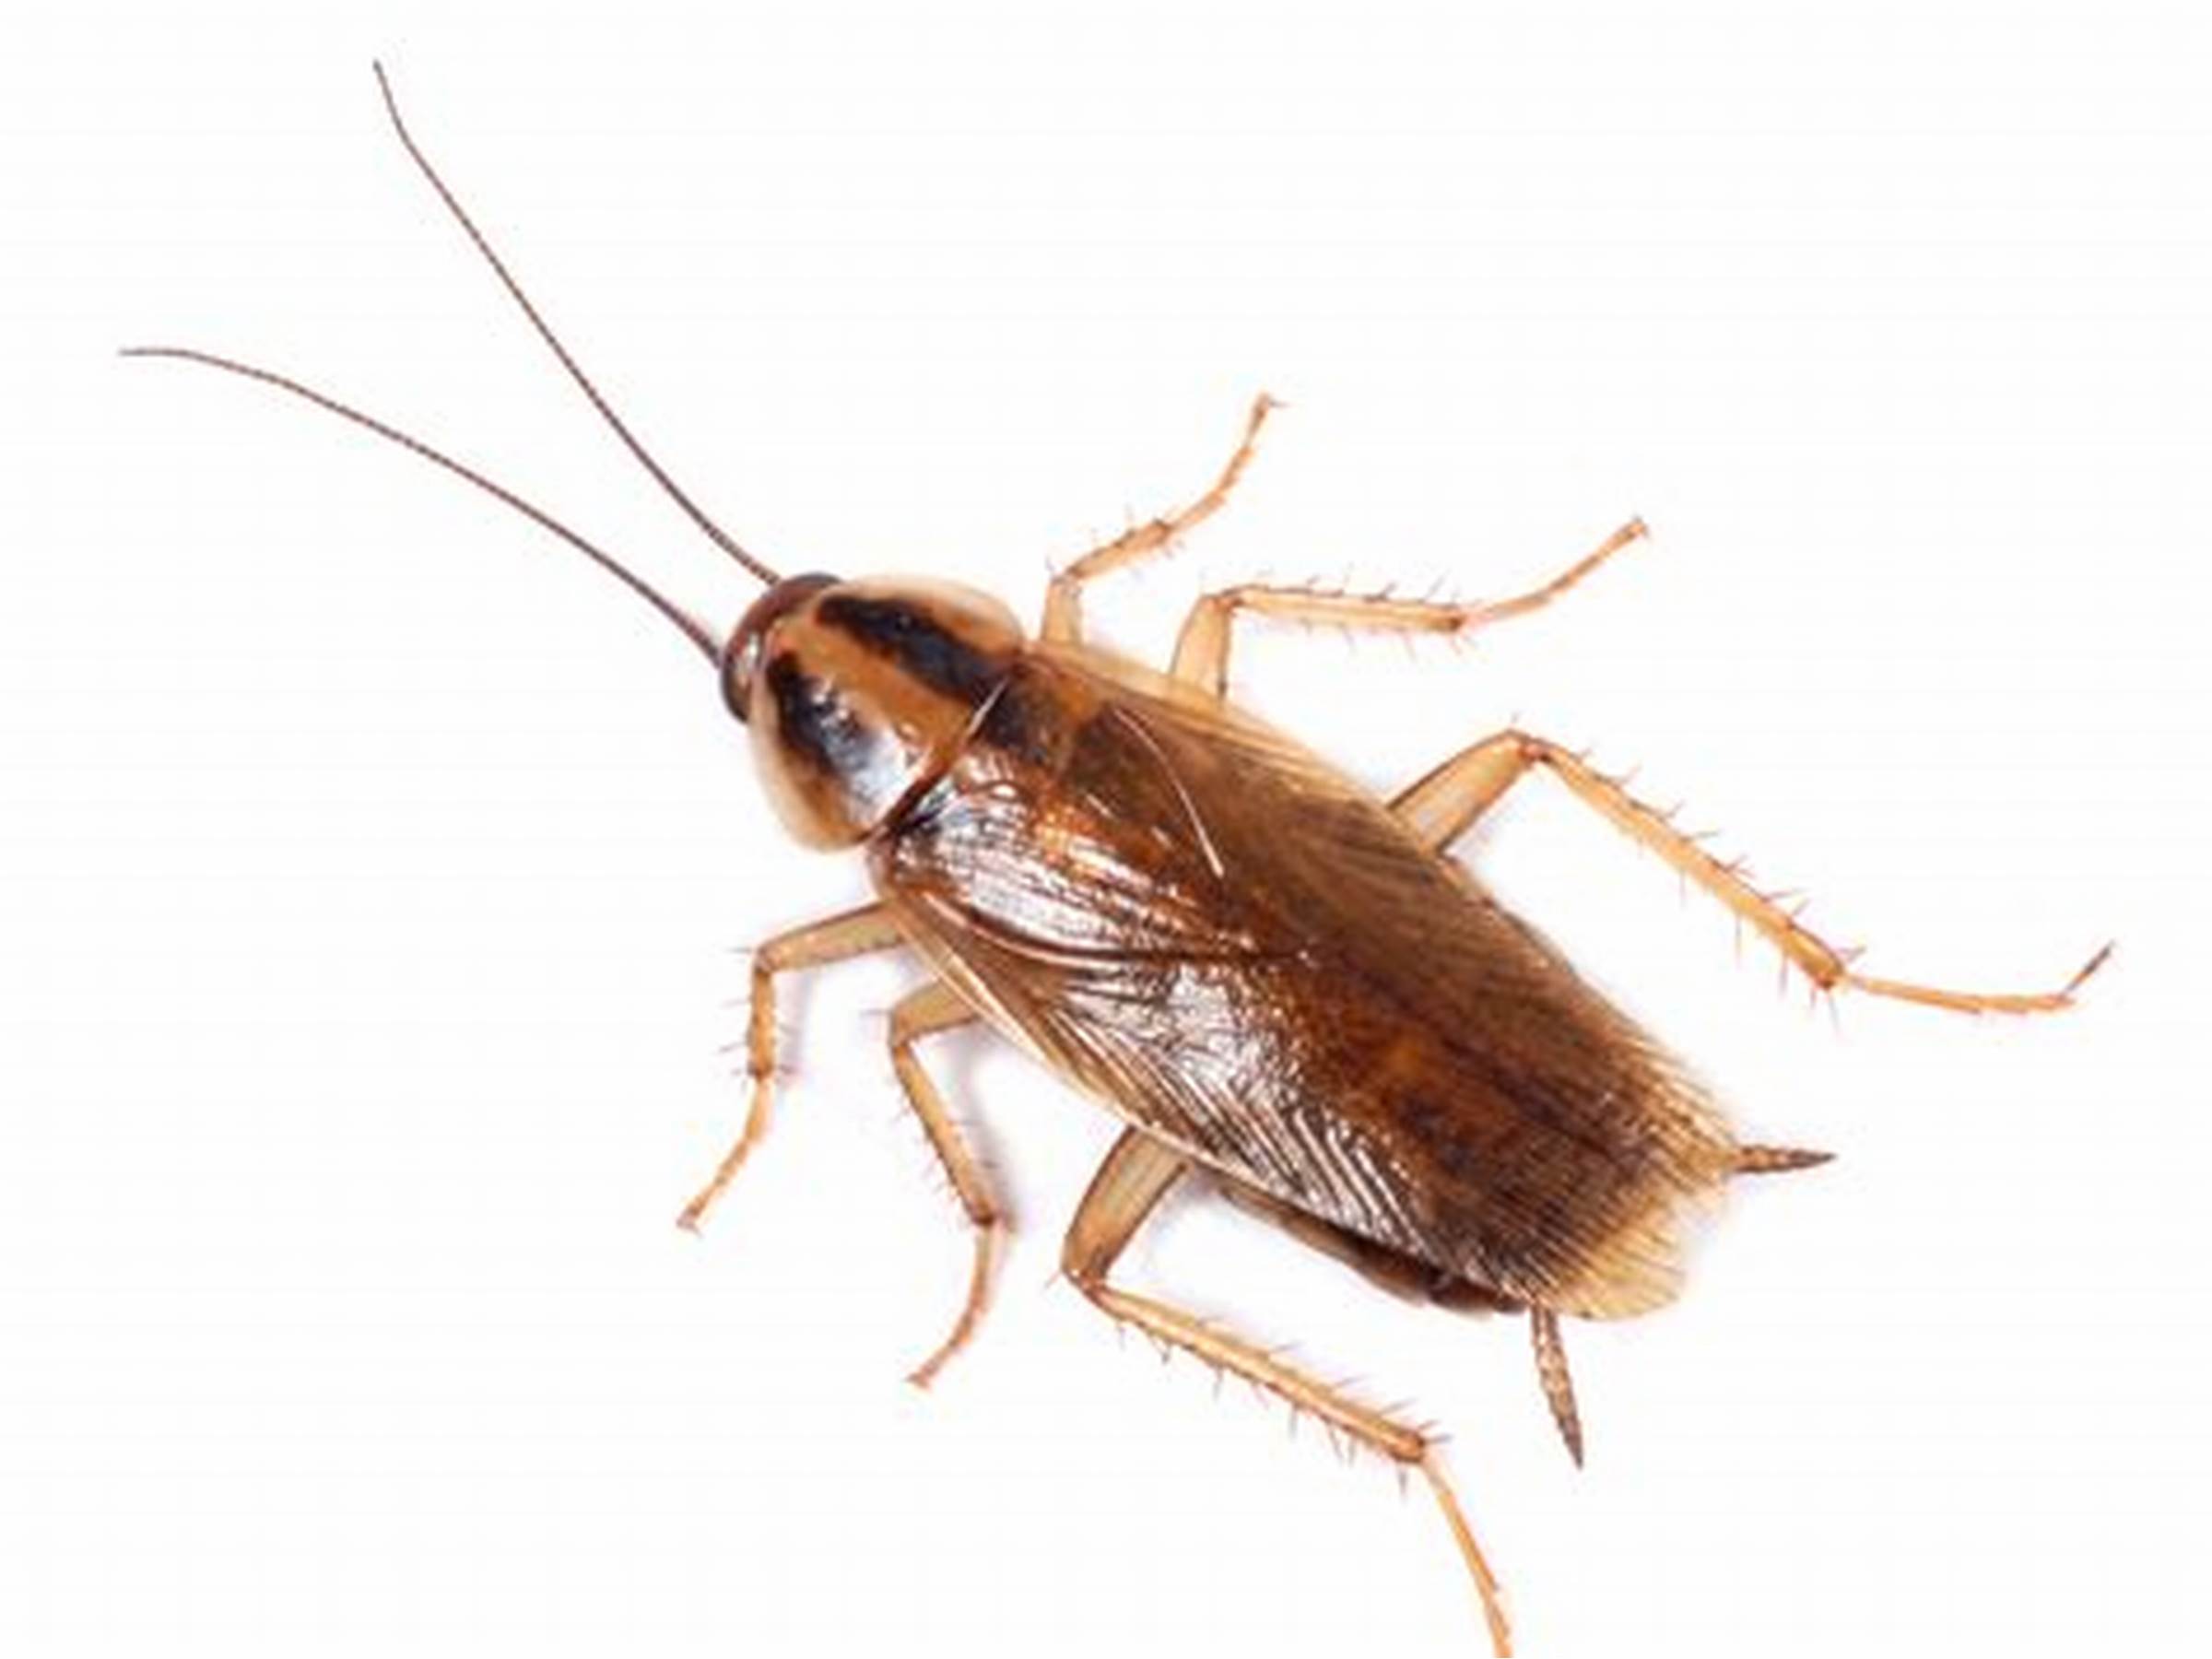 Warning: Cockroaches Seeking Warmth - UF/IFAS Pest Alert